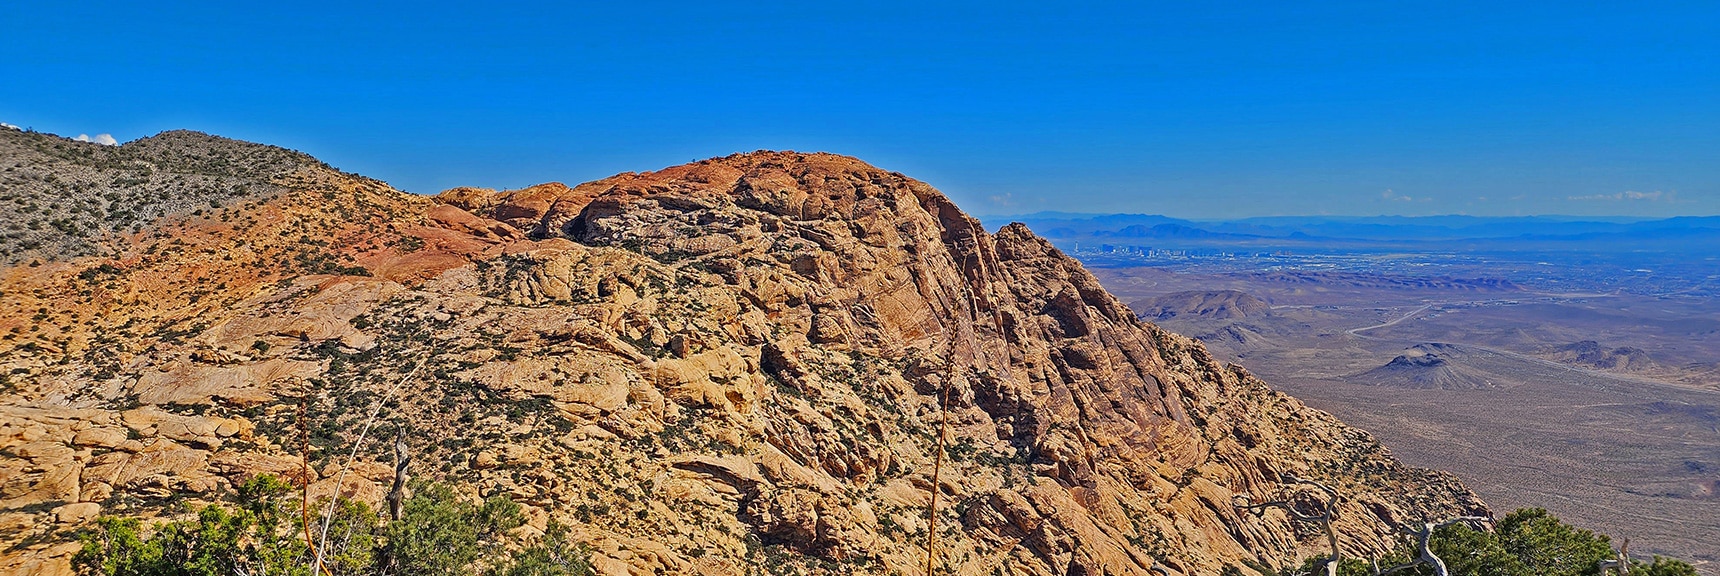 Closer View of Windy Peak, Just North of Hollow Rock Peak. | Hollow Rock Peak | Rainbow Mountain Wilderness, Nevada